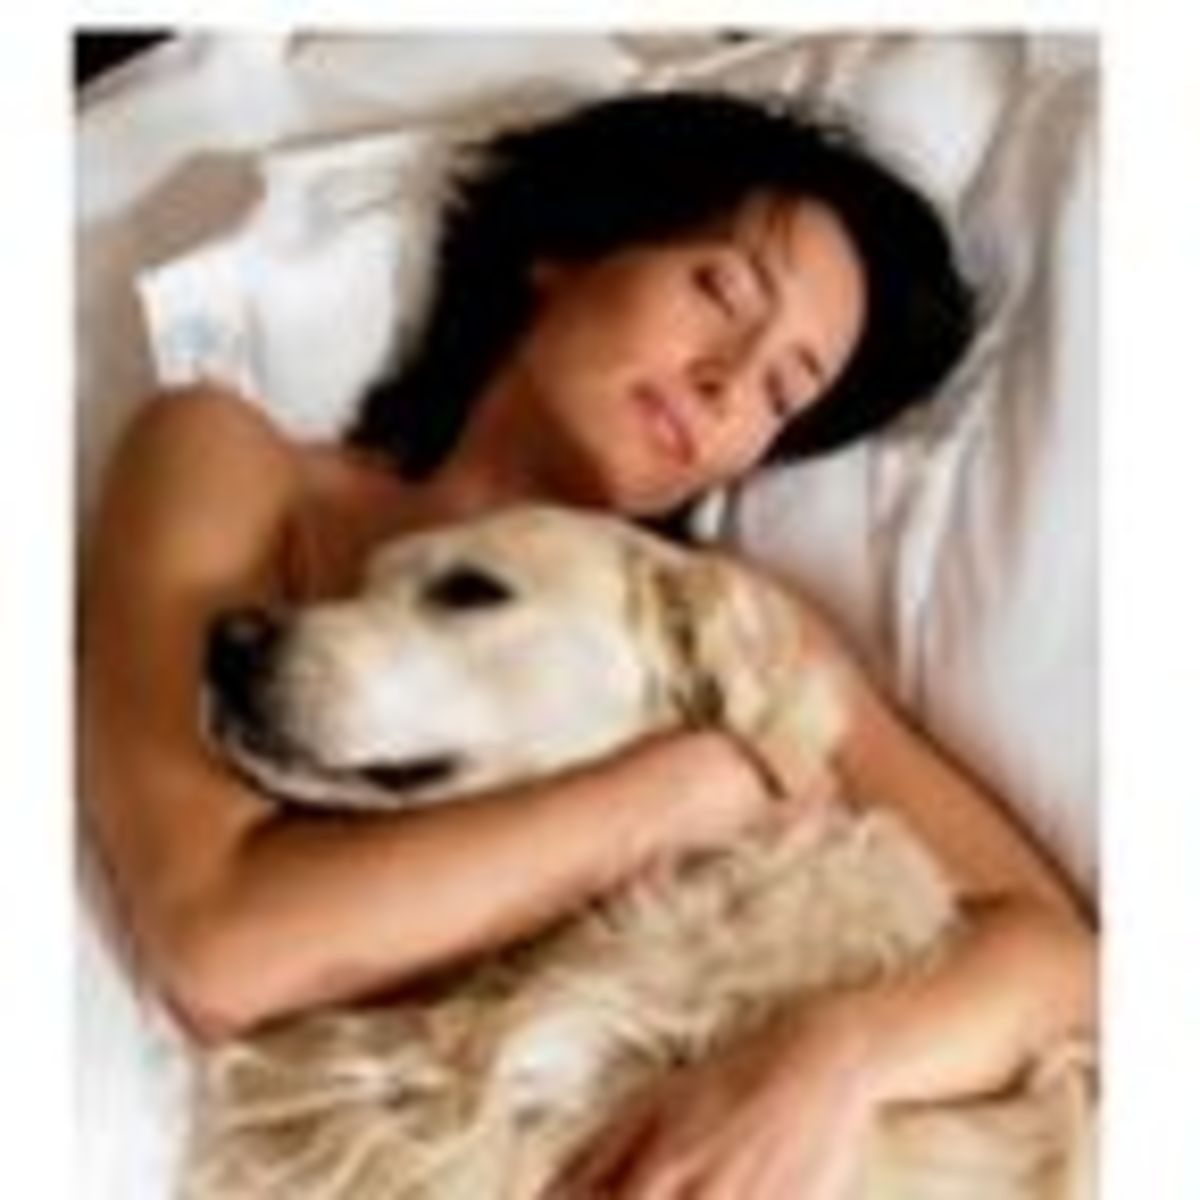 women sleeping with dogs